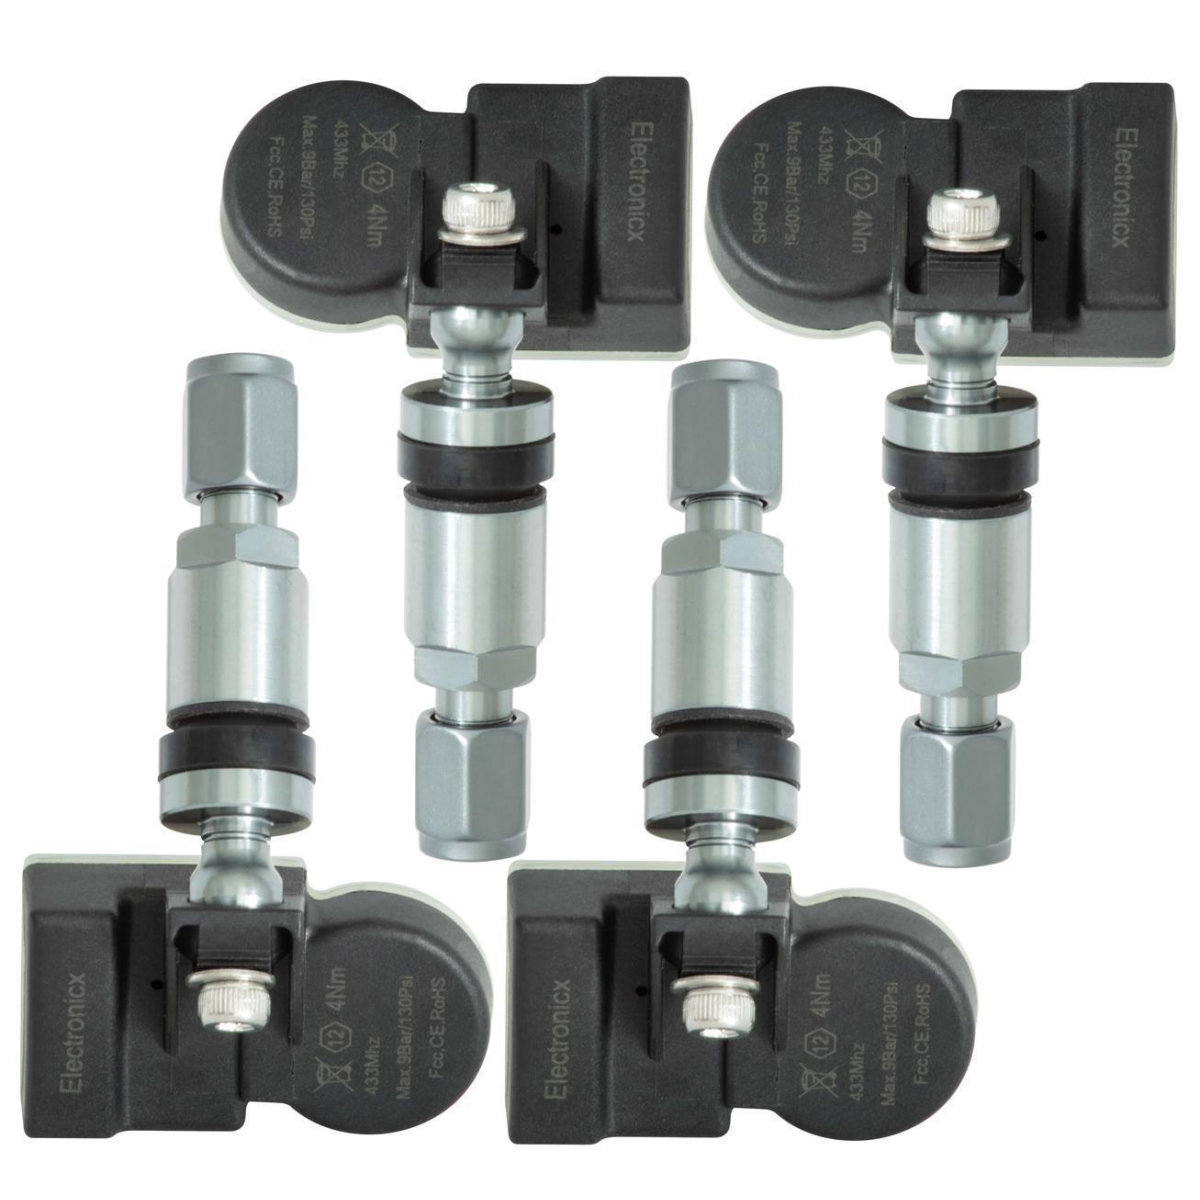 4x TPMS tire pressure sensors metal valve Darkgrey for Saab 9-3 13327259 1331134 13348393